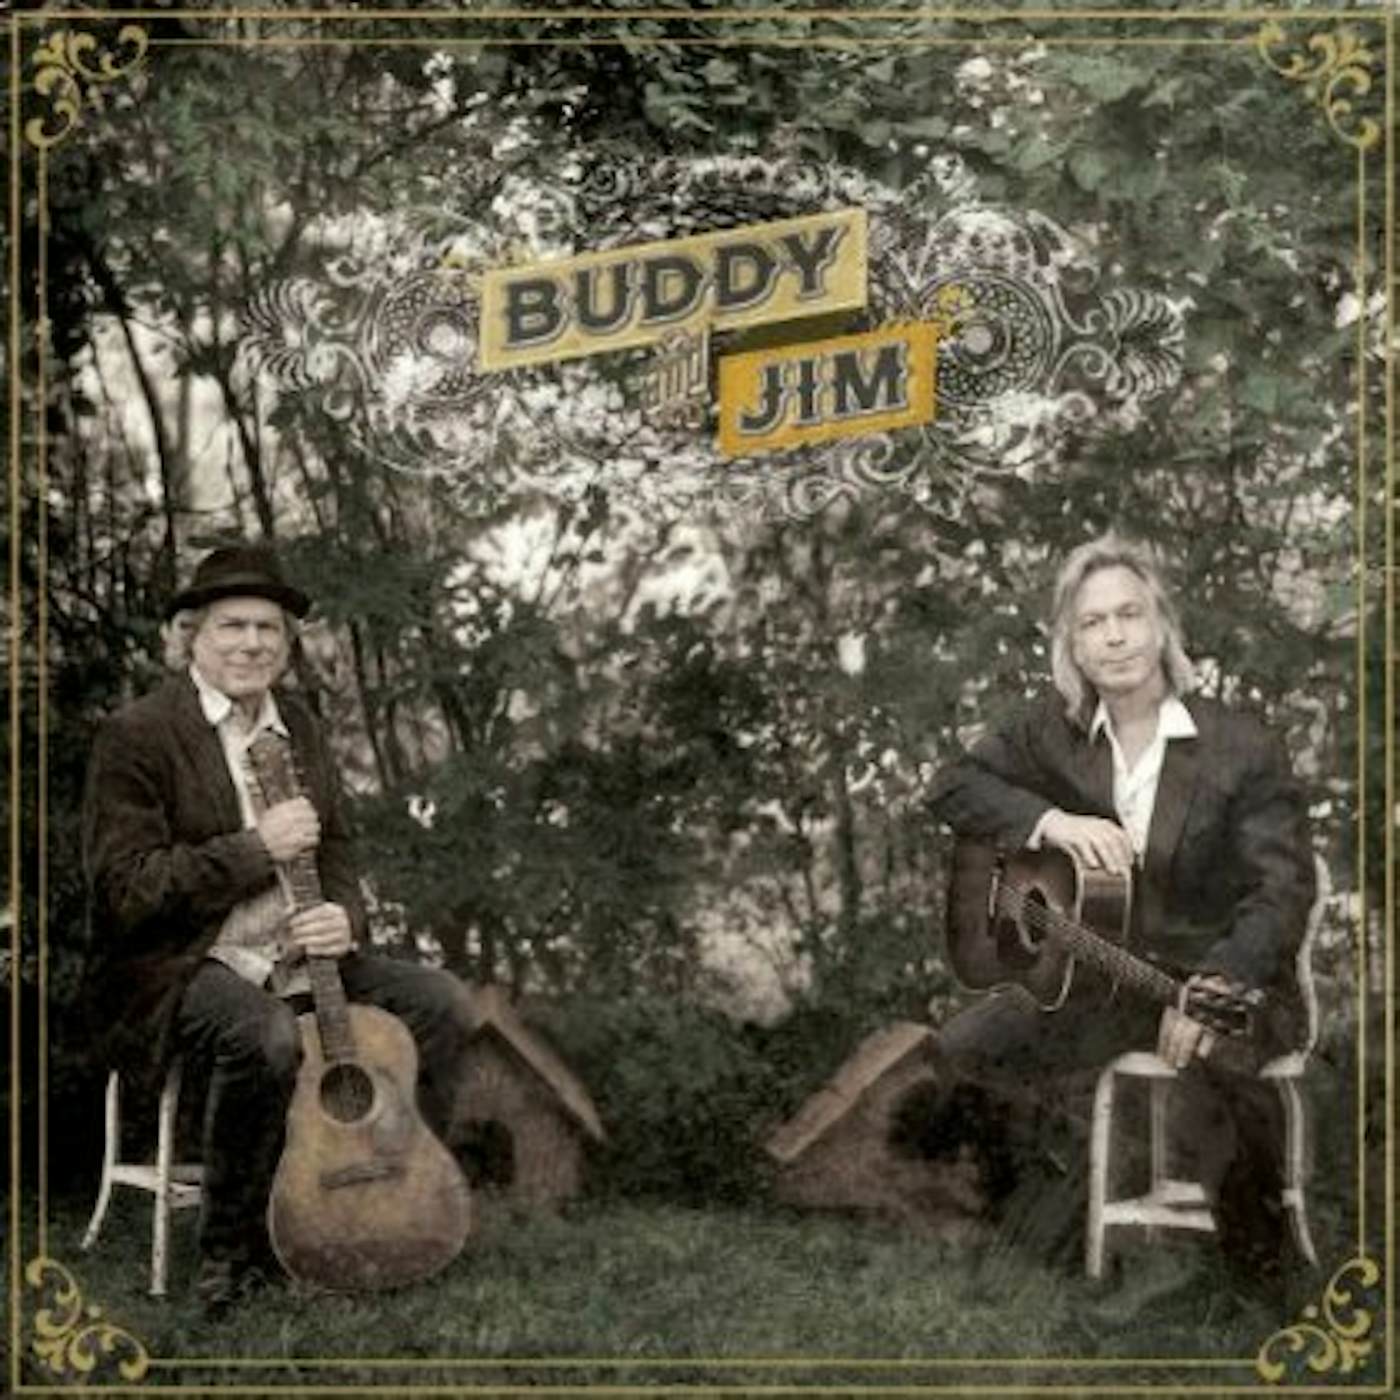 Buddy Miller & Jim Lauderdale BUDDY & JIM CD